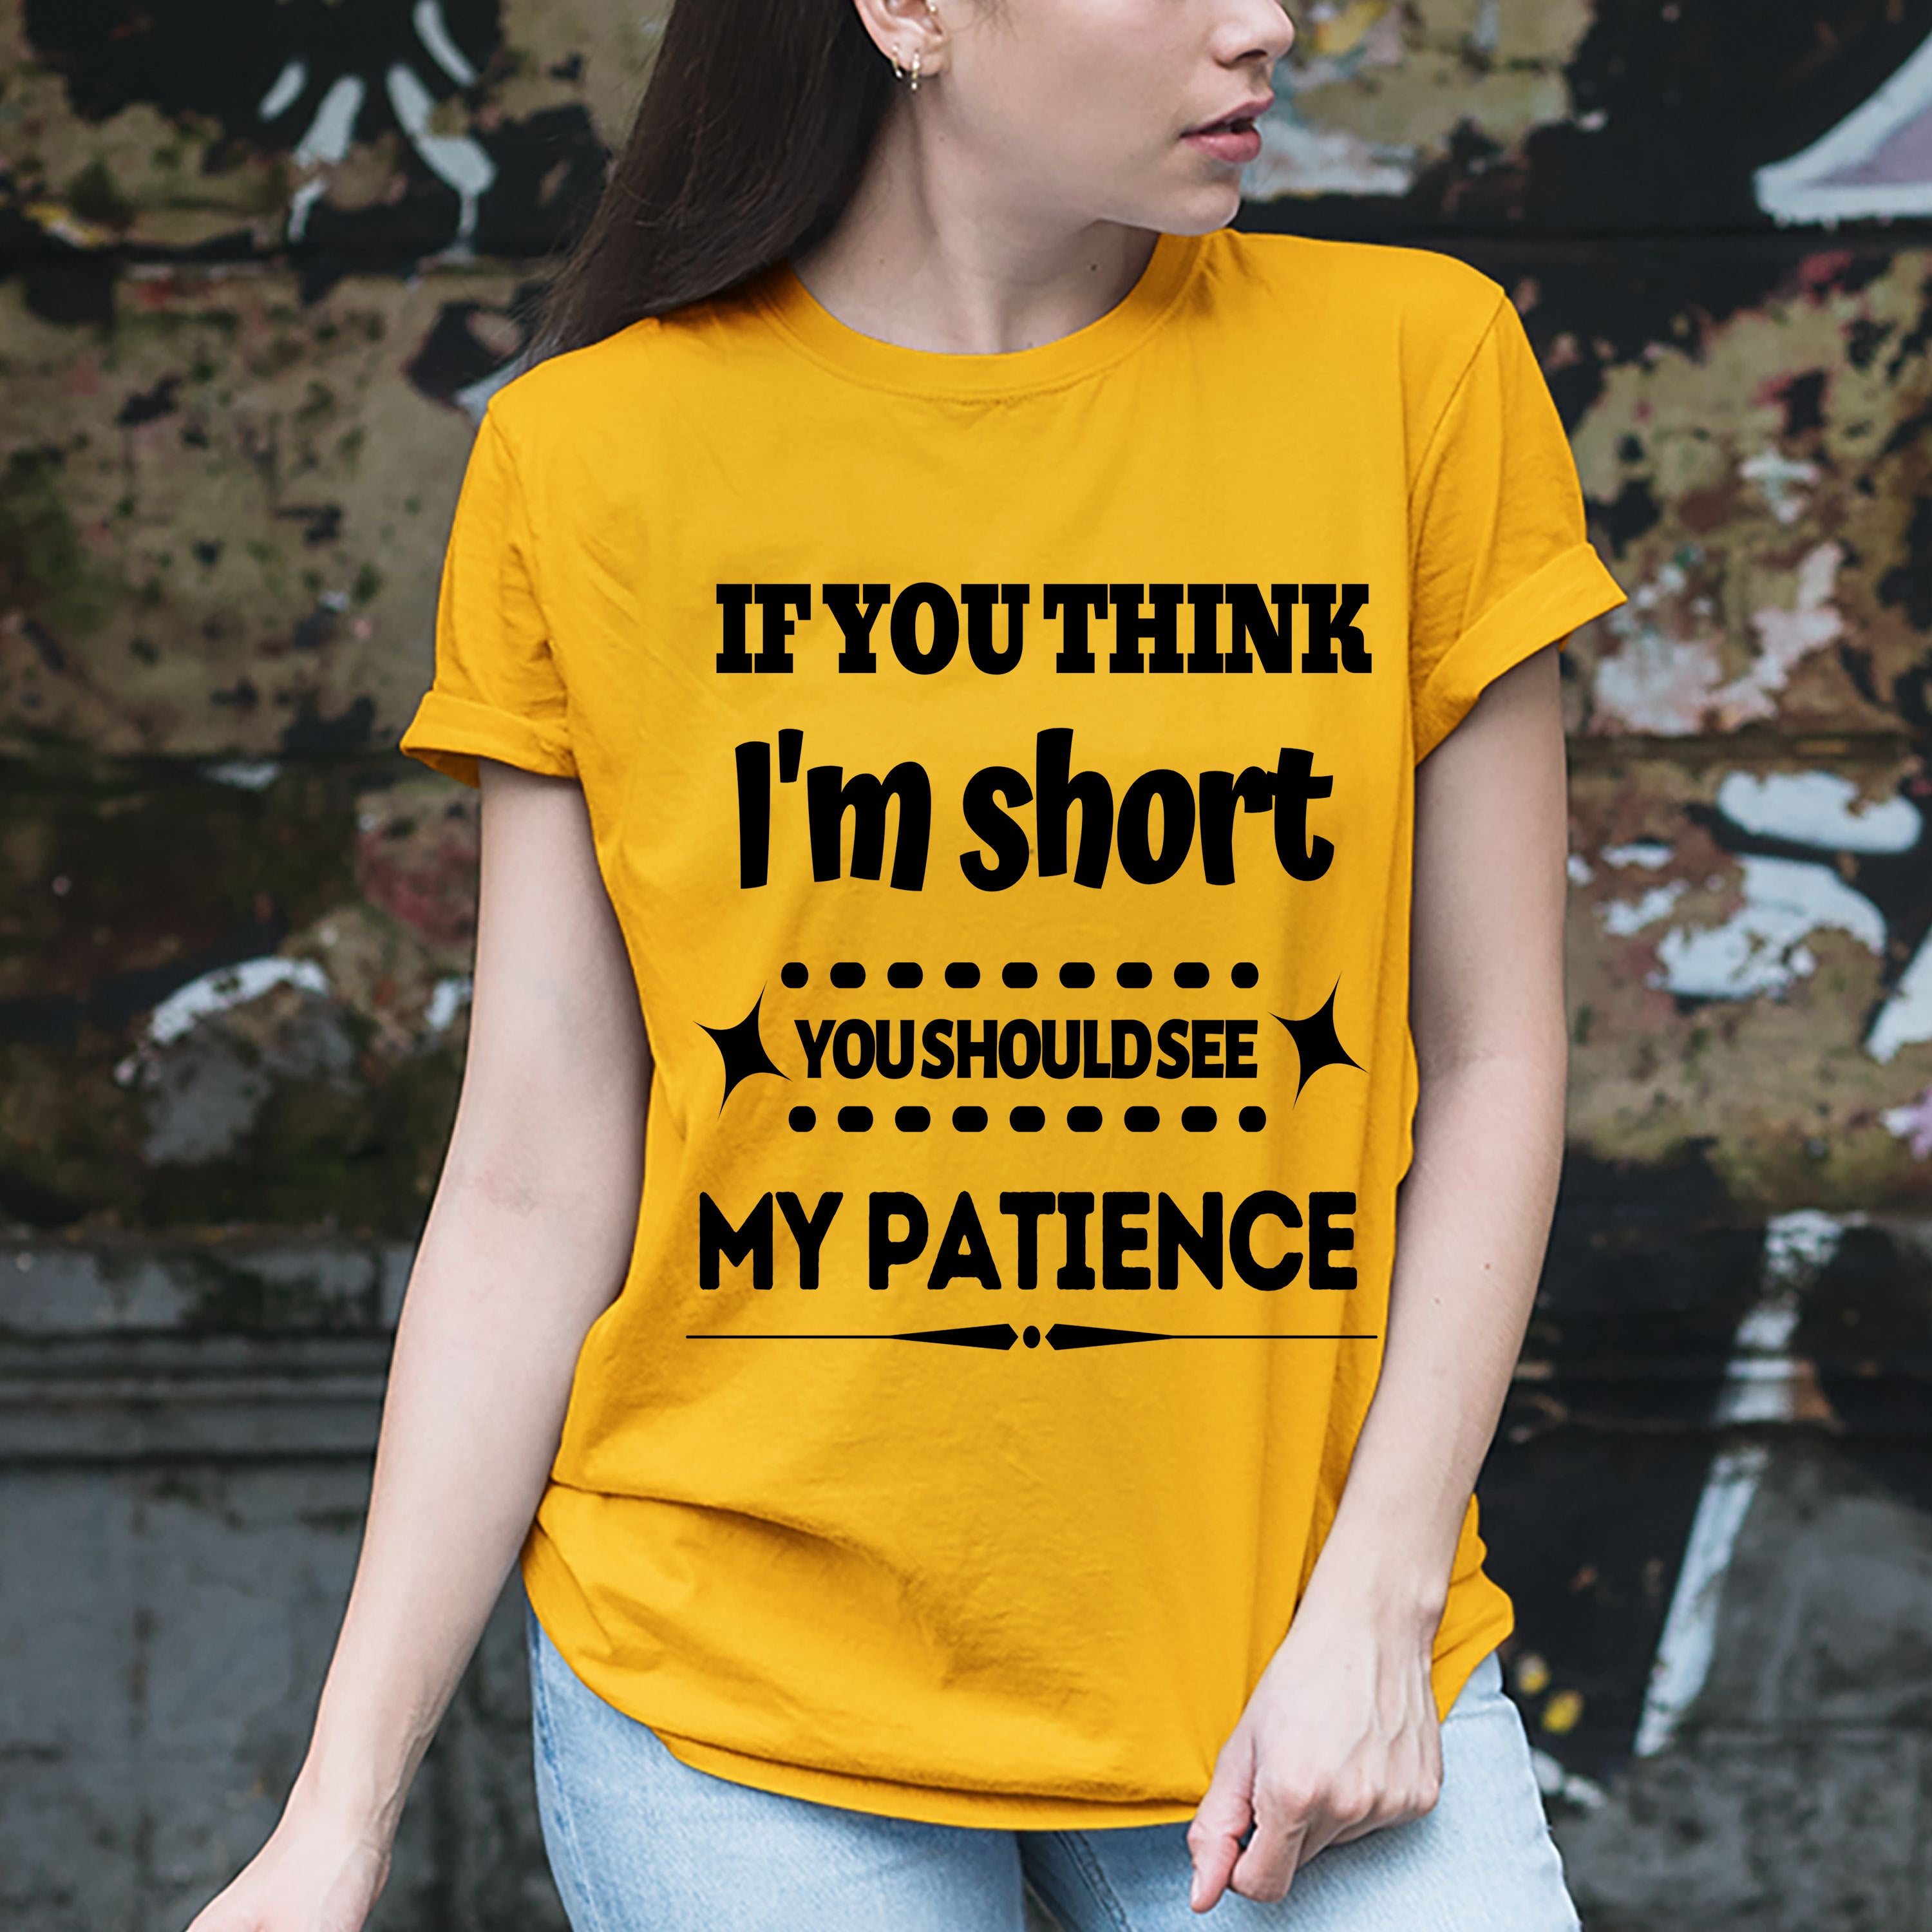 "IF YOU THINK I'M SHORT" T-shirt